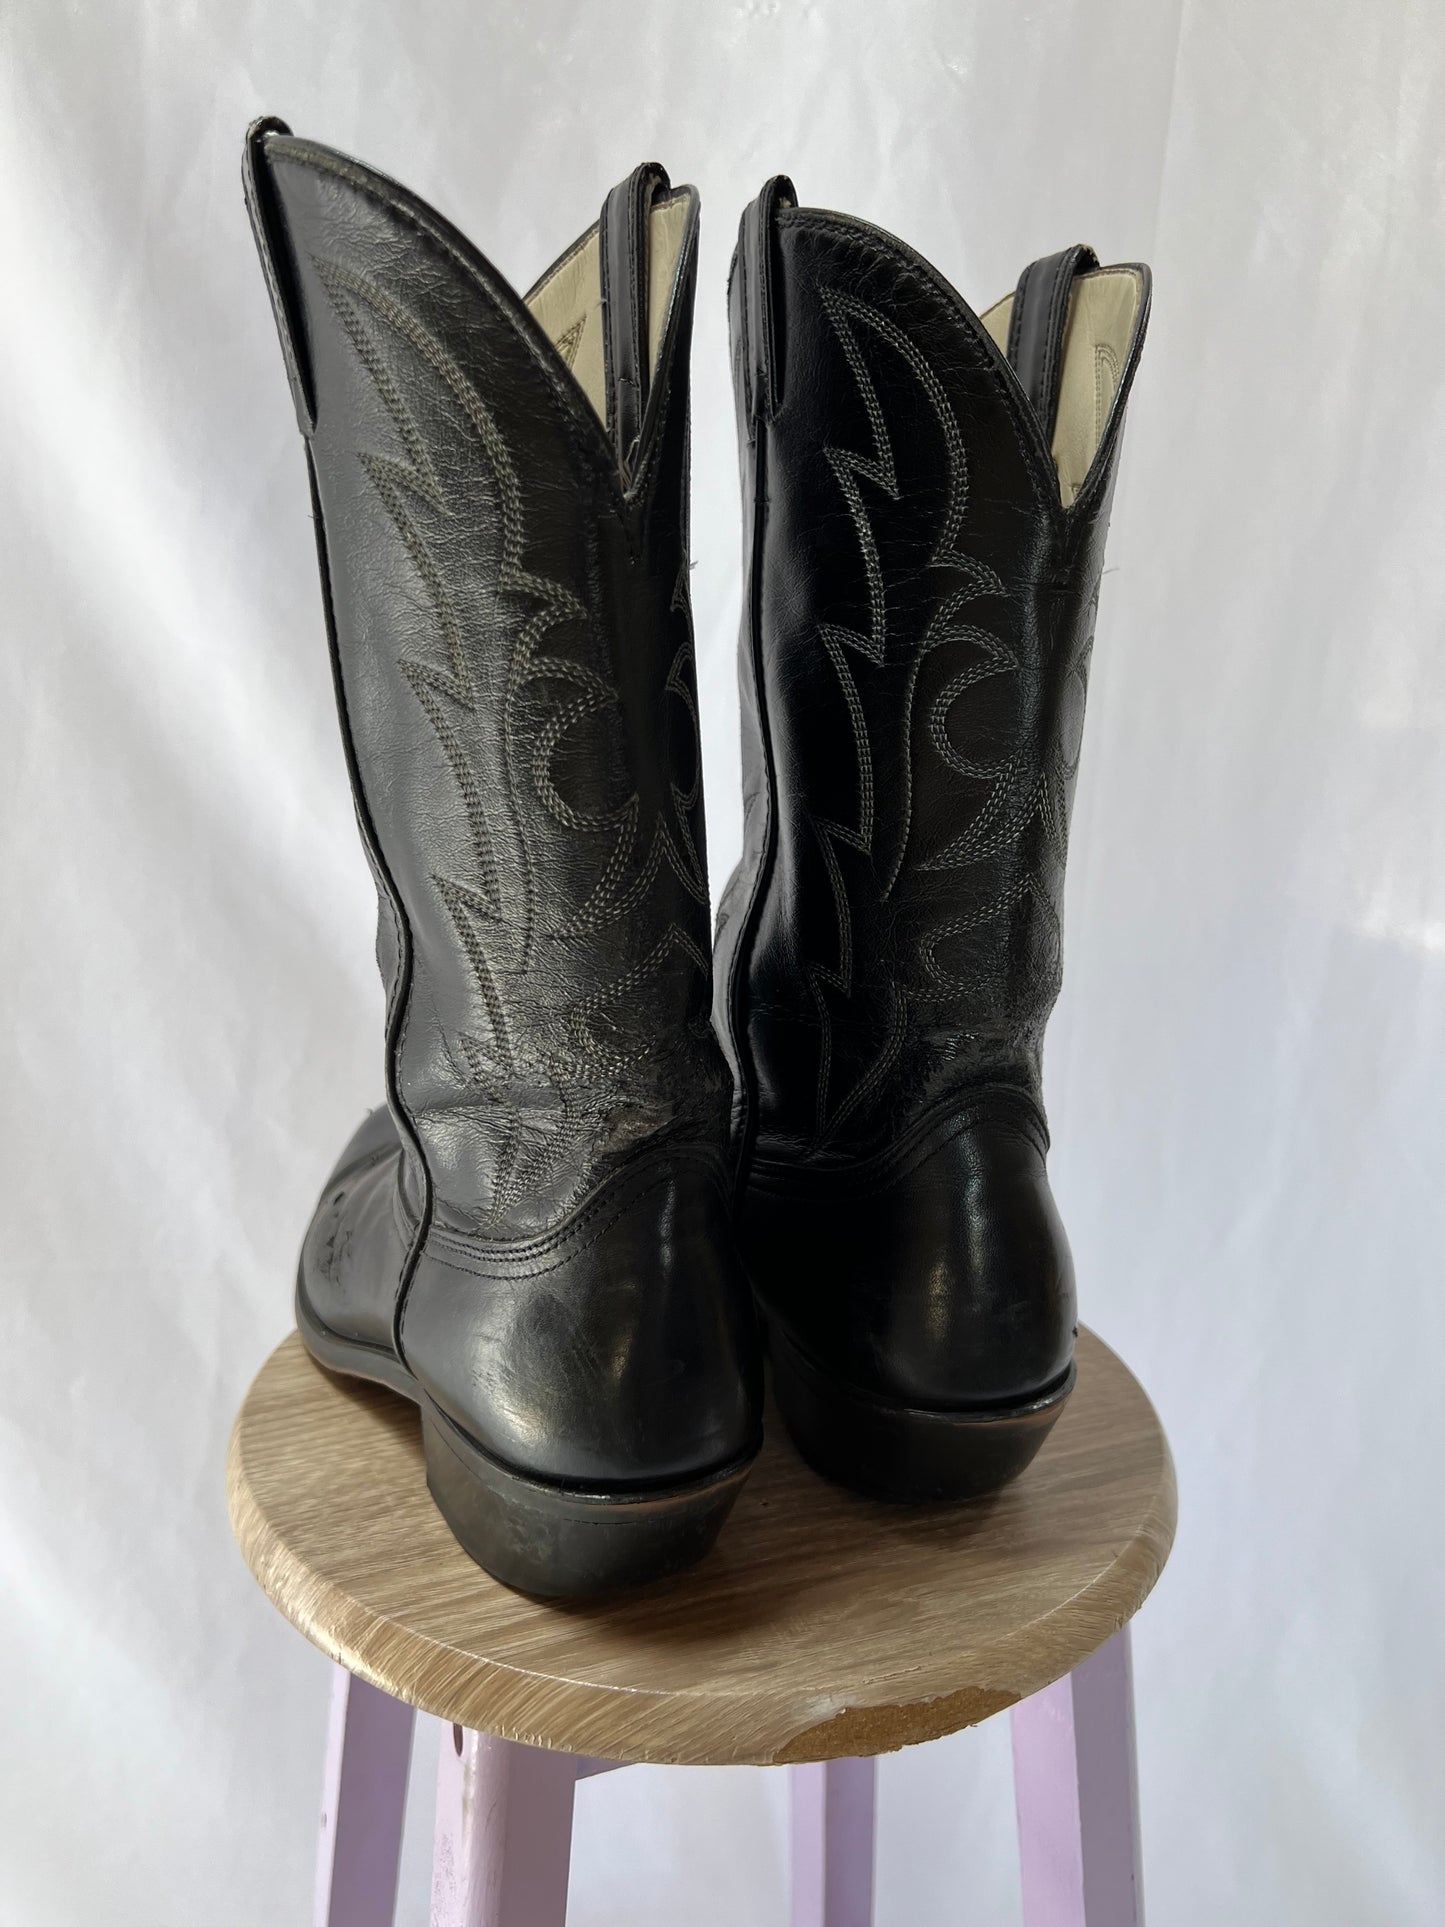 Black Leather Cowboy Boots - 8.5/9